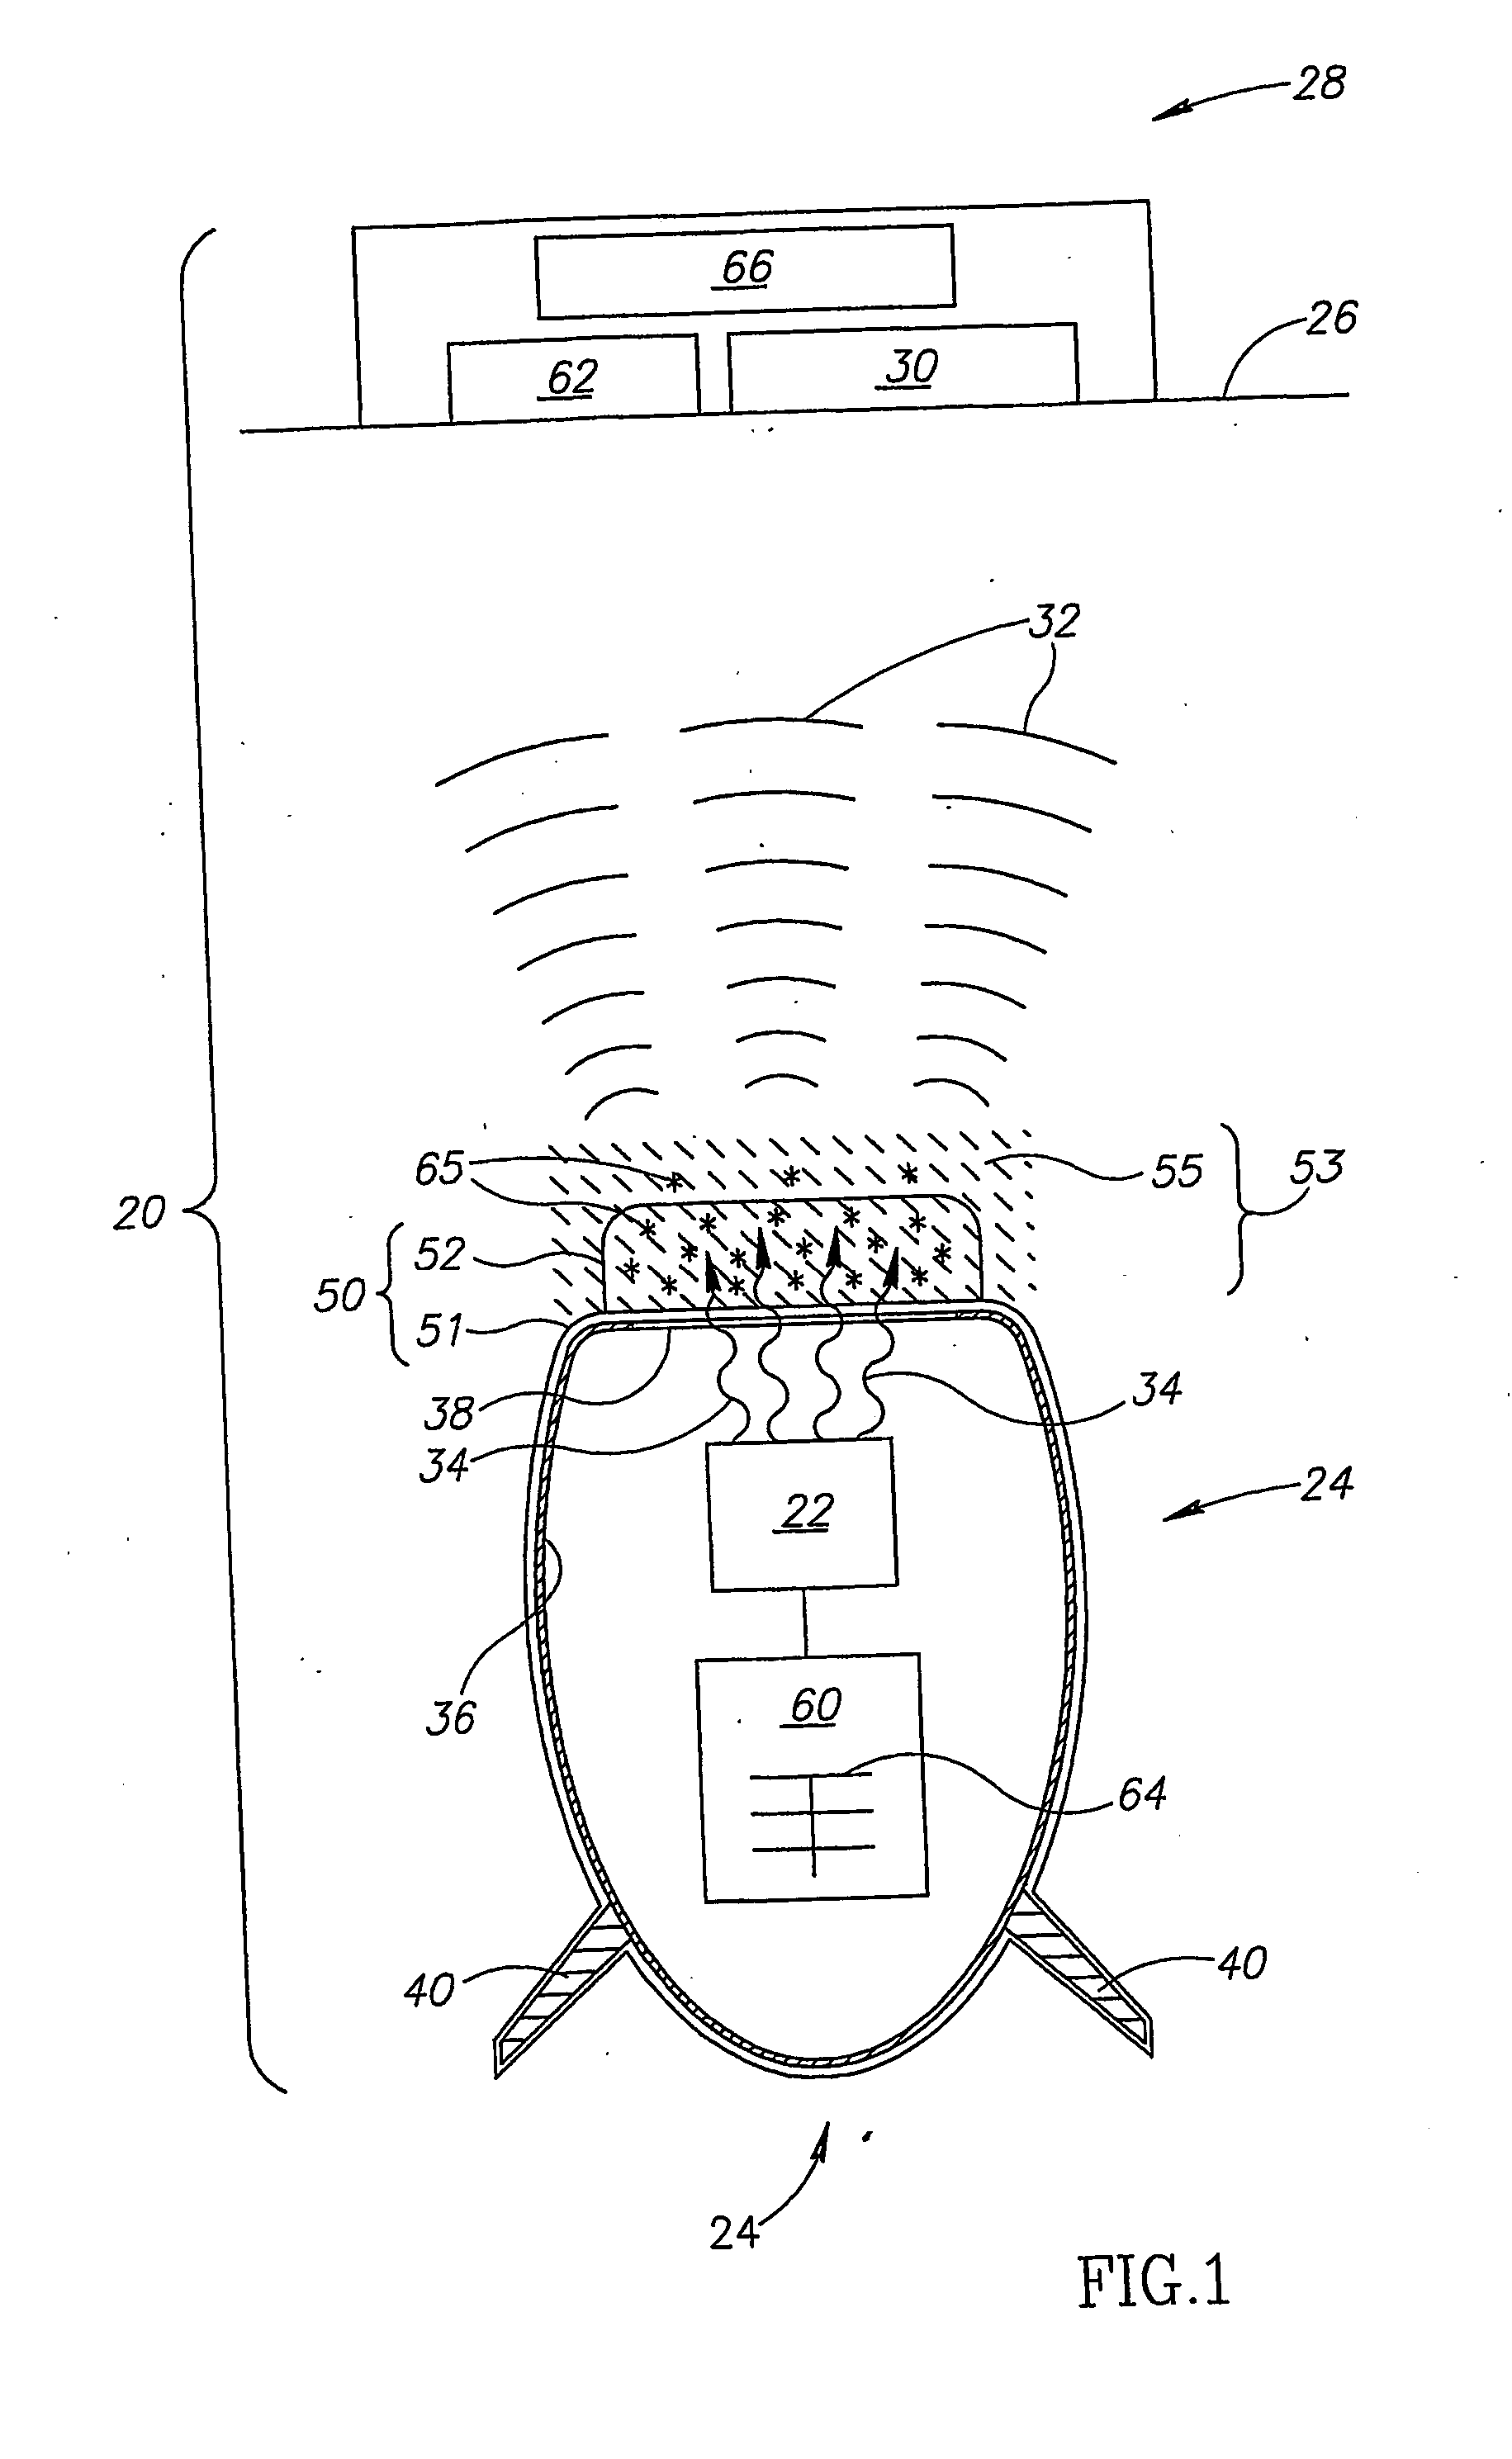 Glucometer comprising an implantable light source